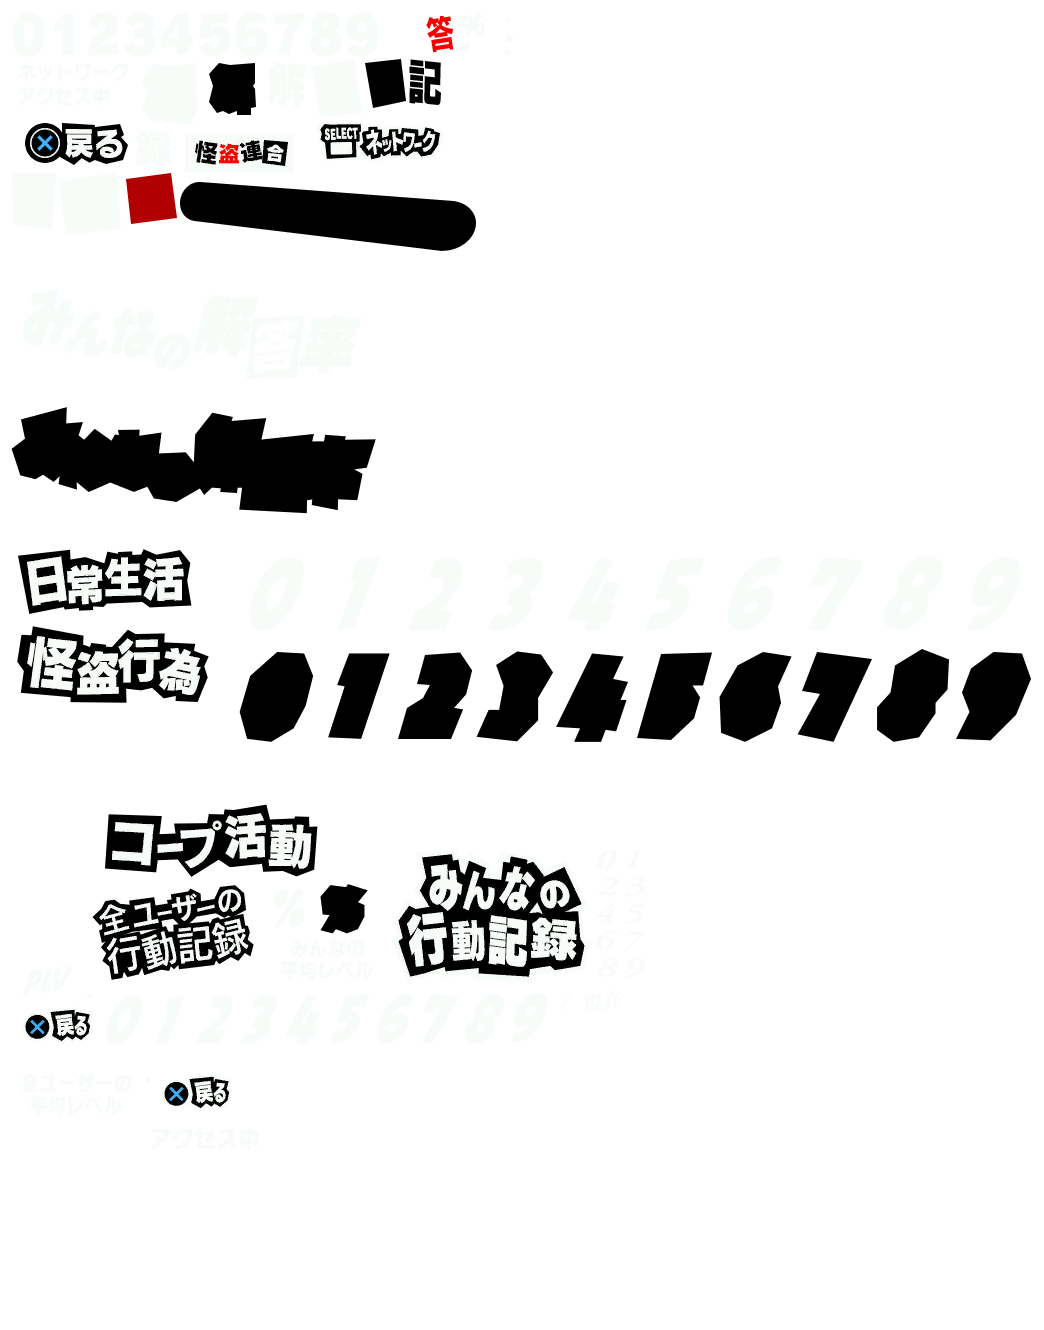 Persona 5 - Network (JPN)